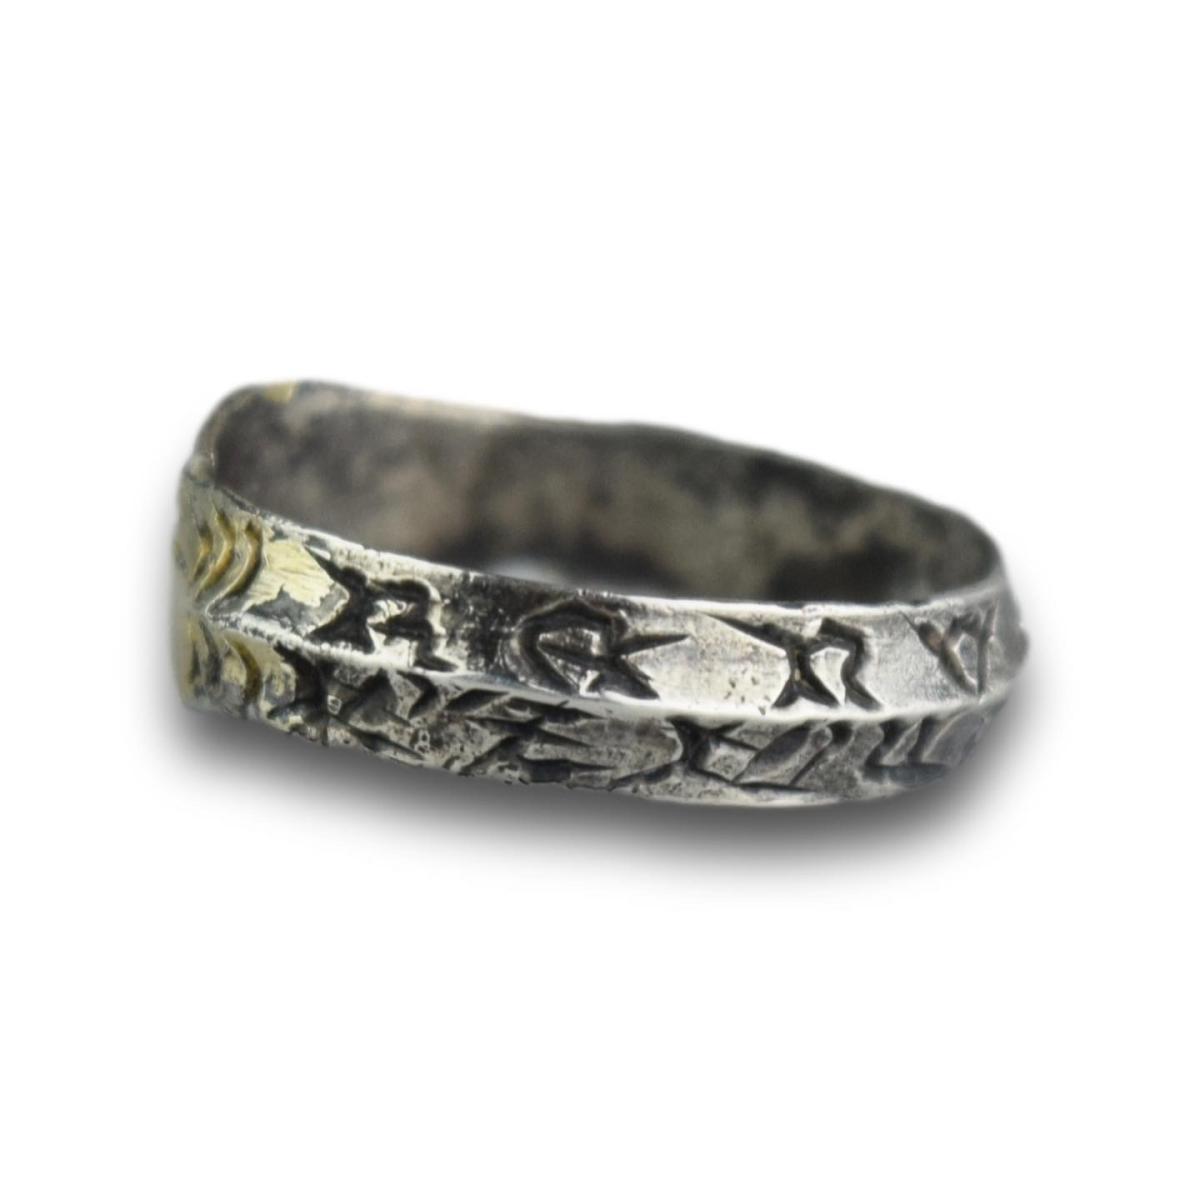 A silver gilt Fede ring. English, 15th century